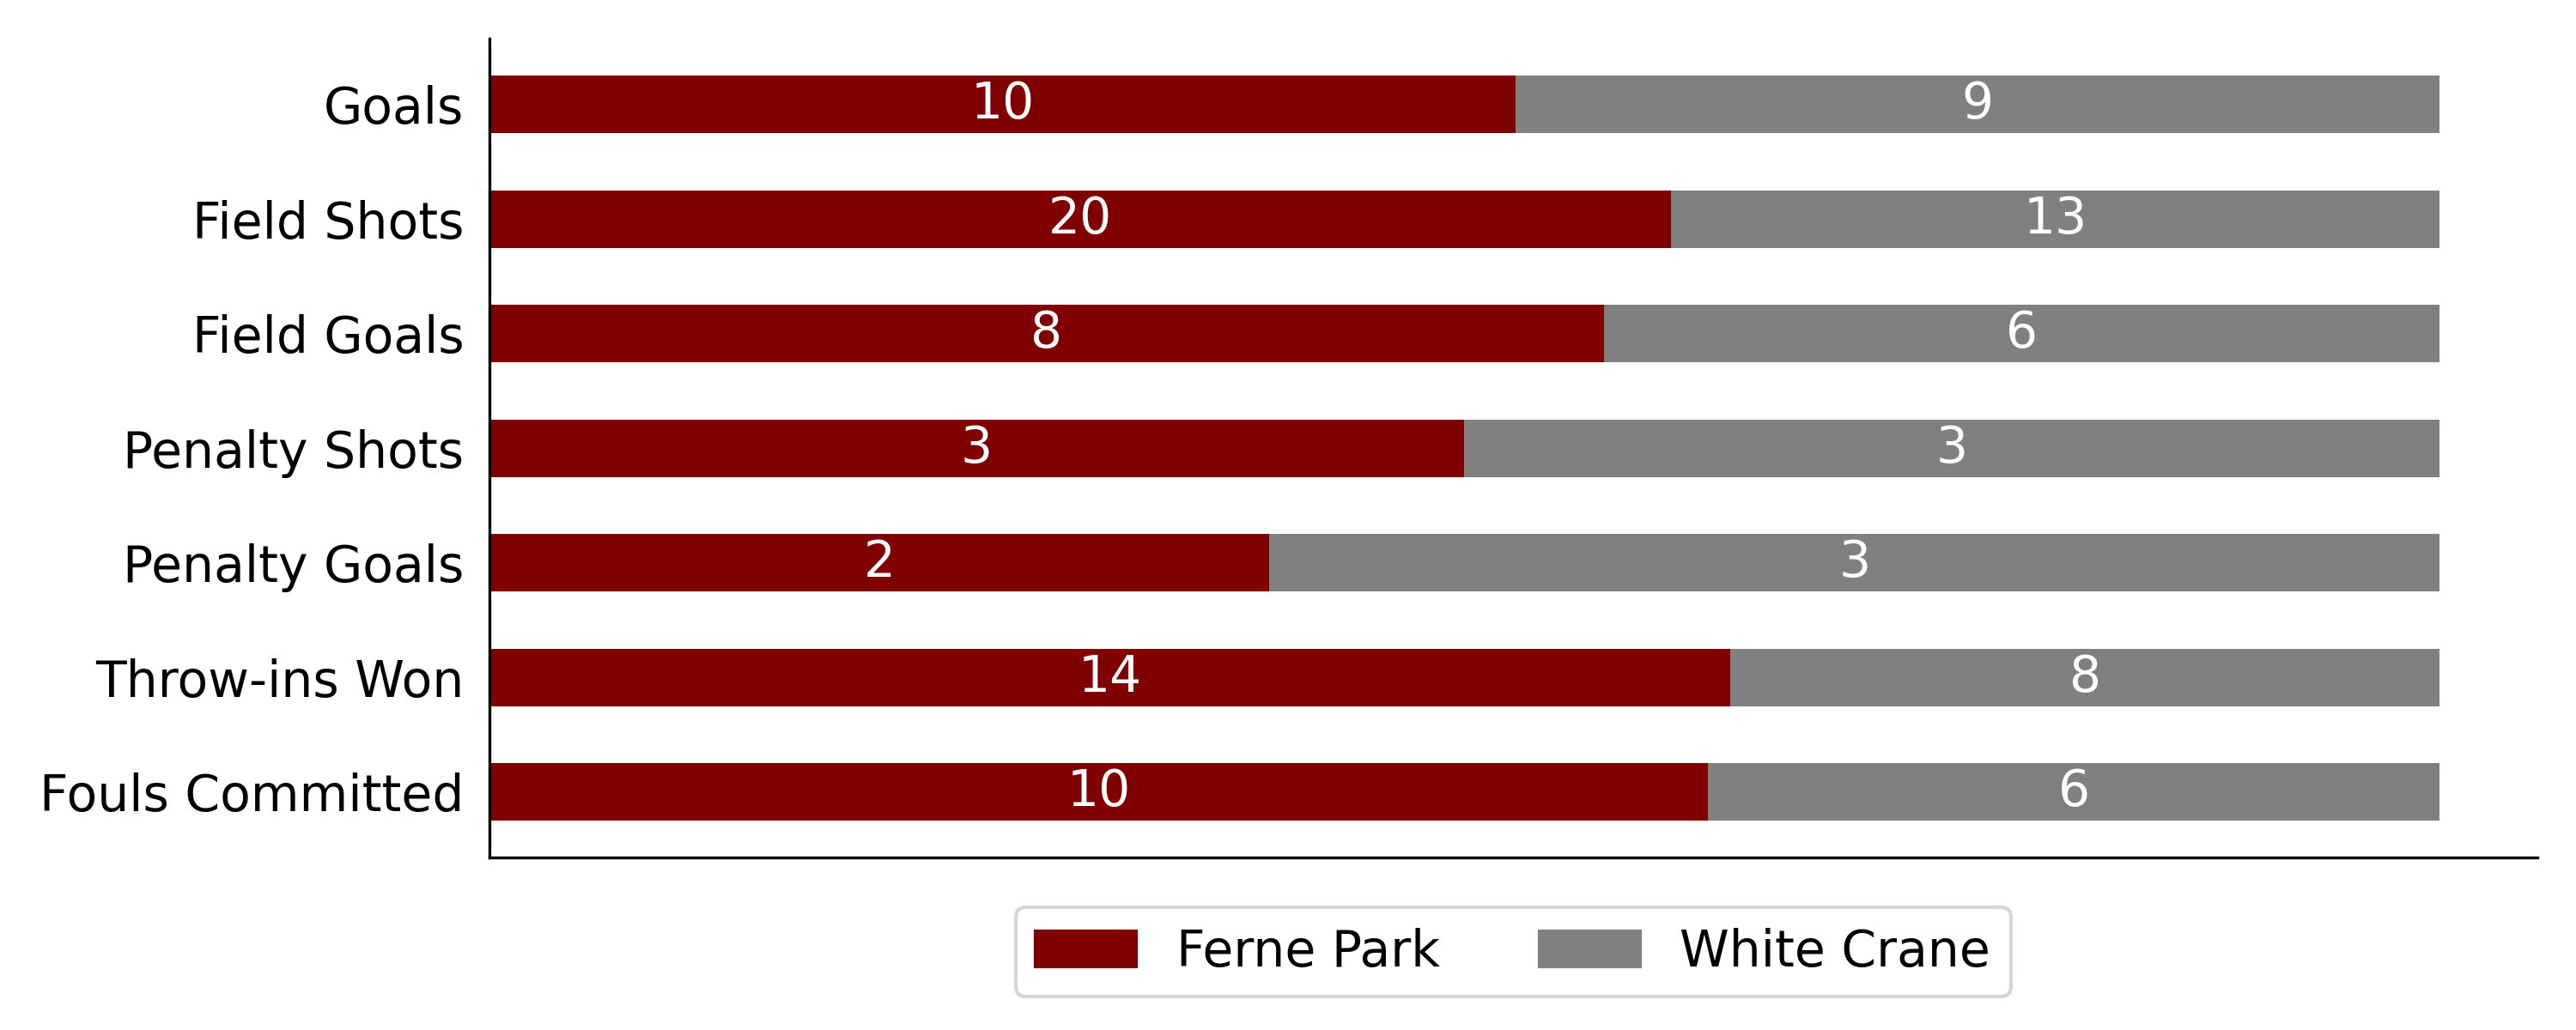 Ferne Park won against White Crane 6